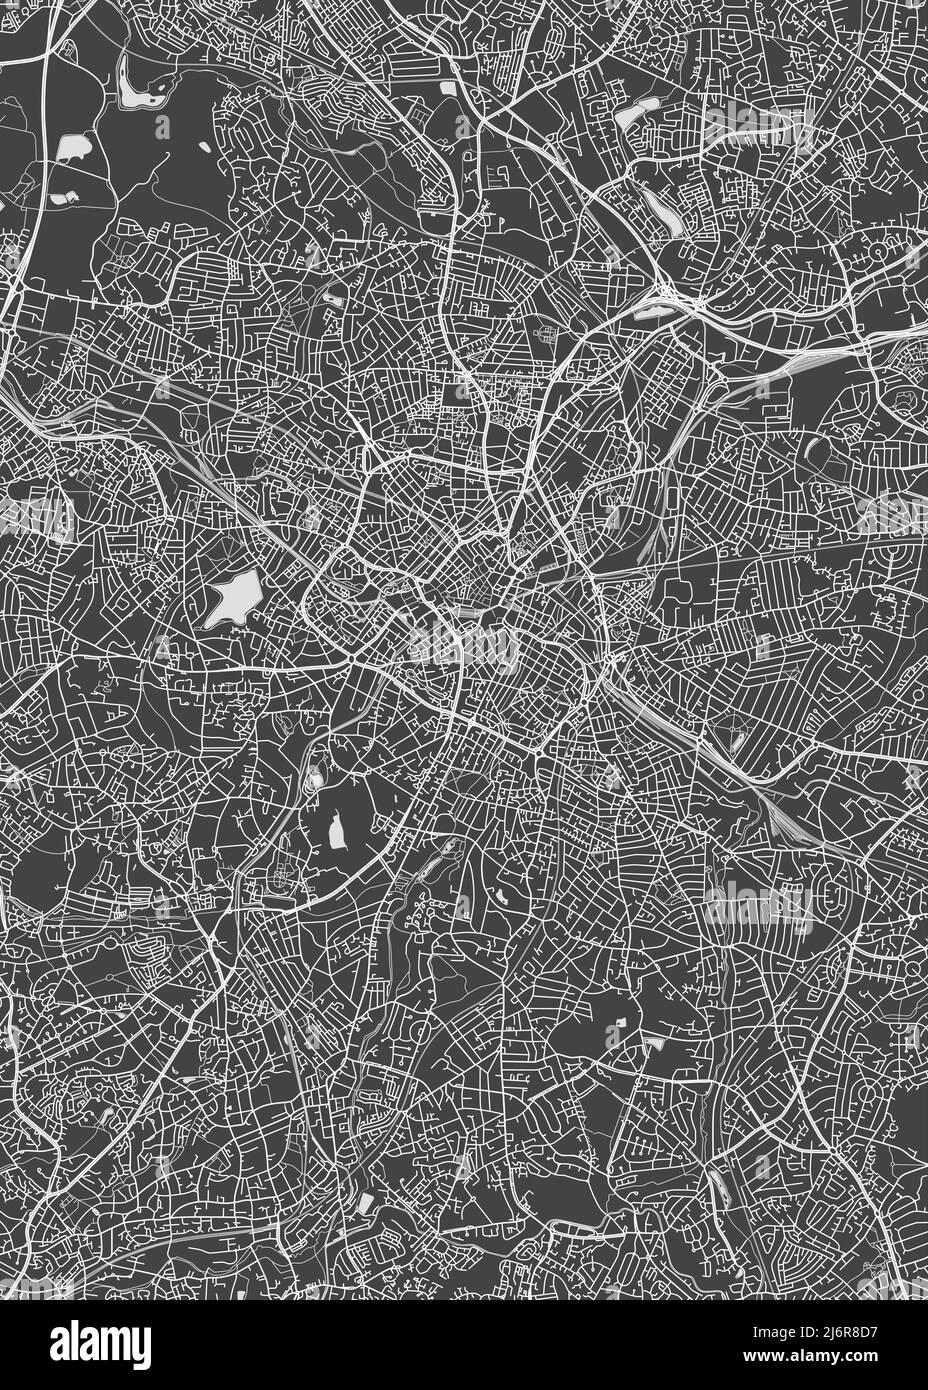 Stadtplan Birmingham, monochromer Detailplan, Vektorgrafik Stock Vektor